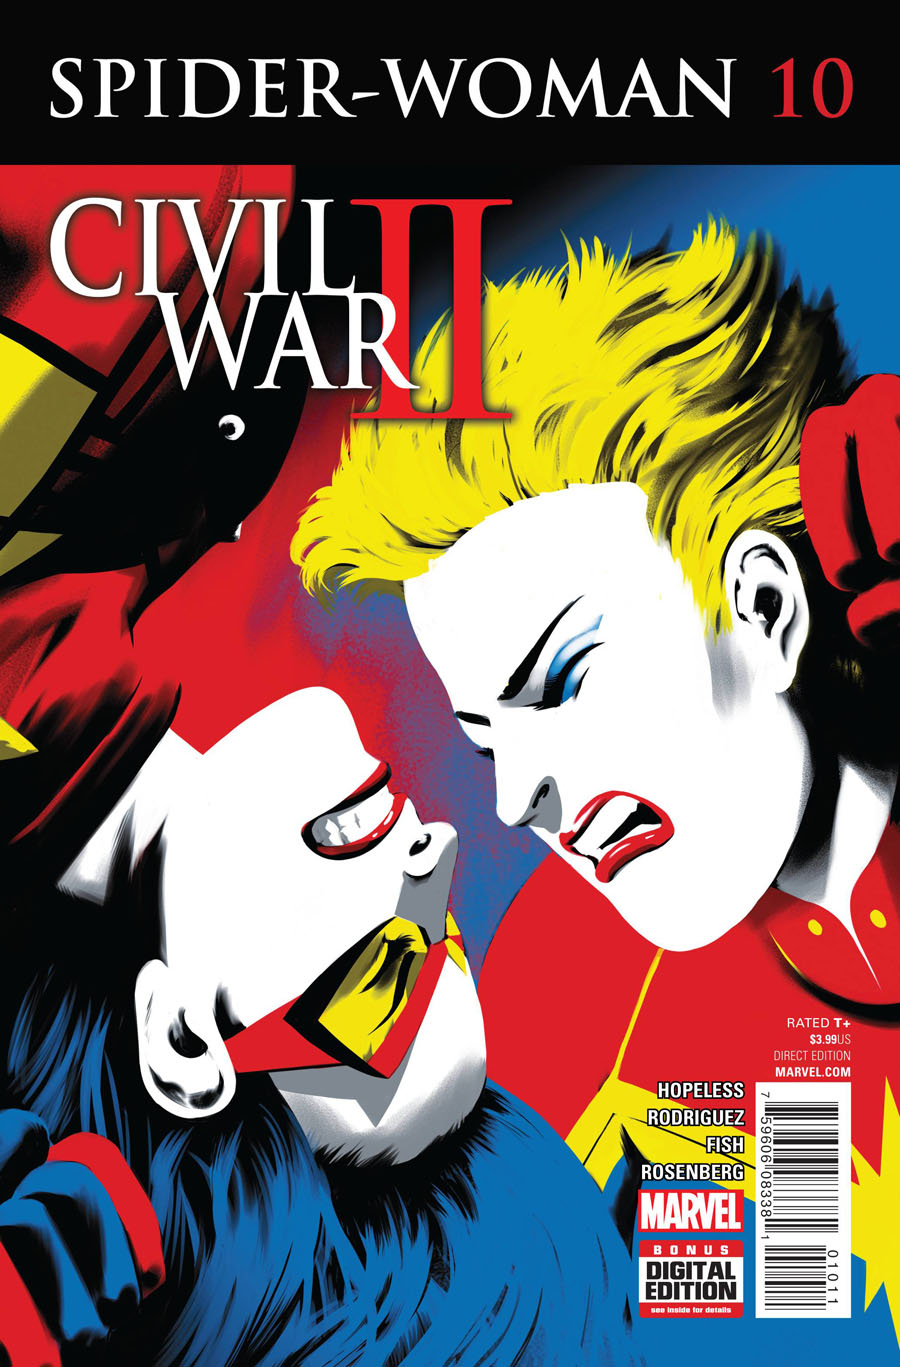 Spider-Woman Vol 6 #10 (Civil War II Tie-In)